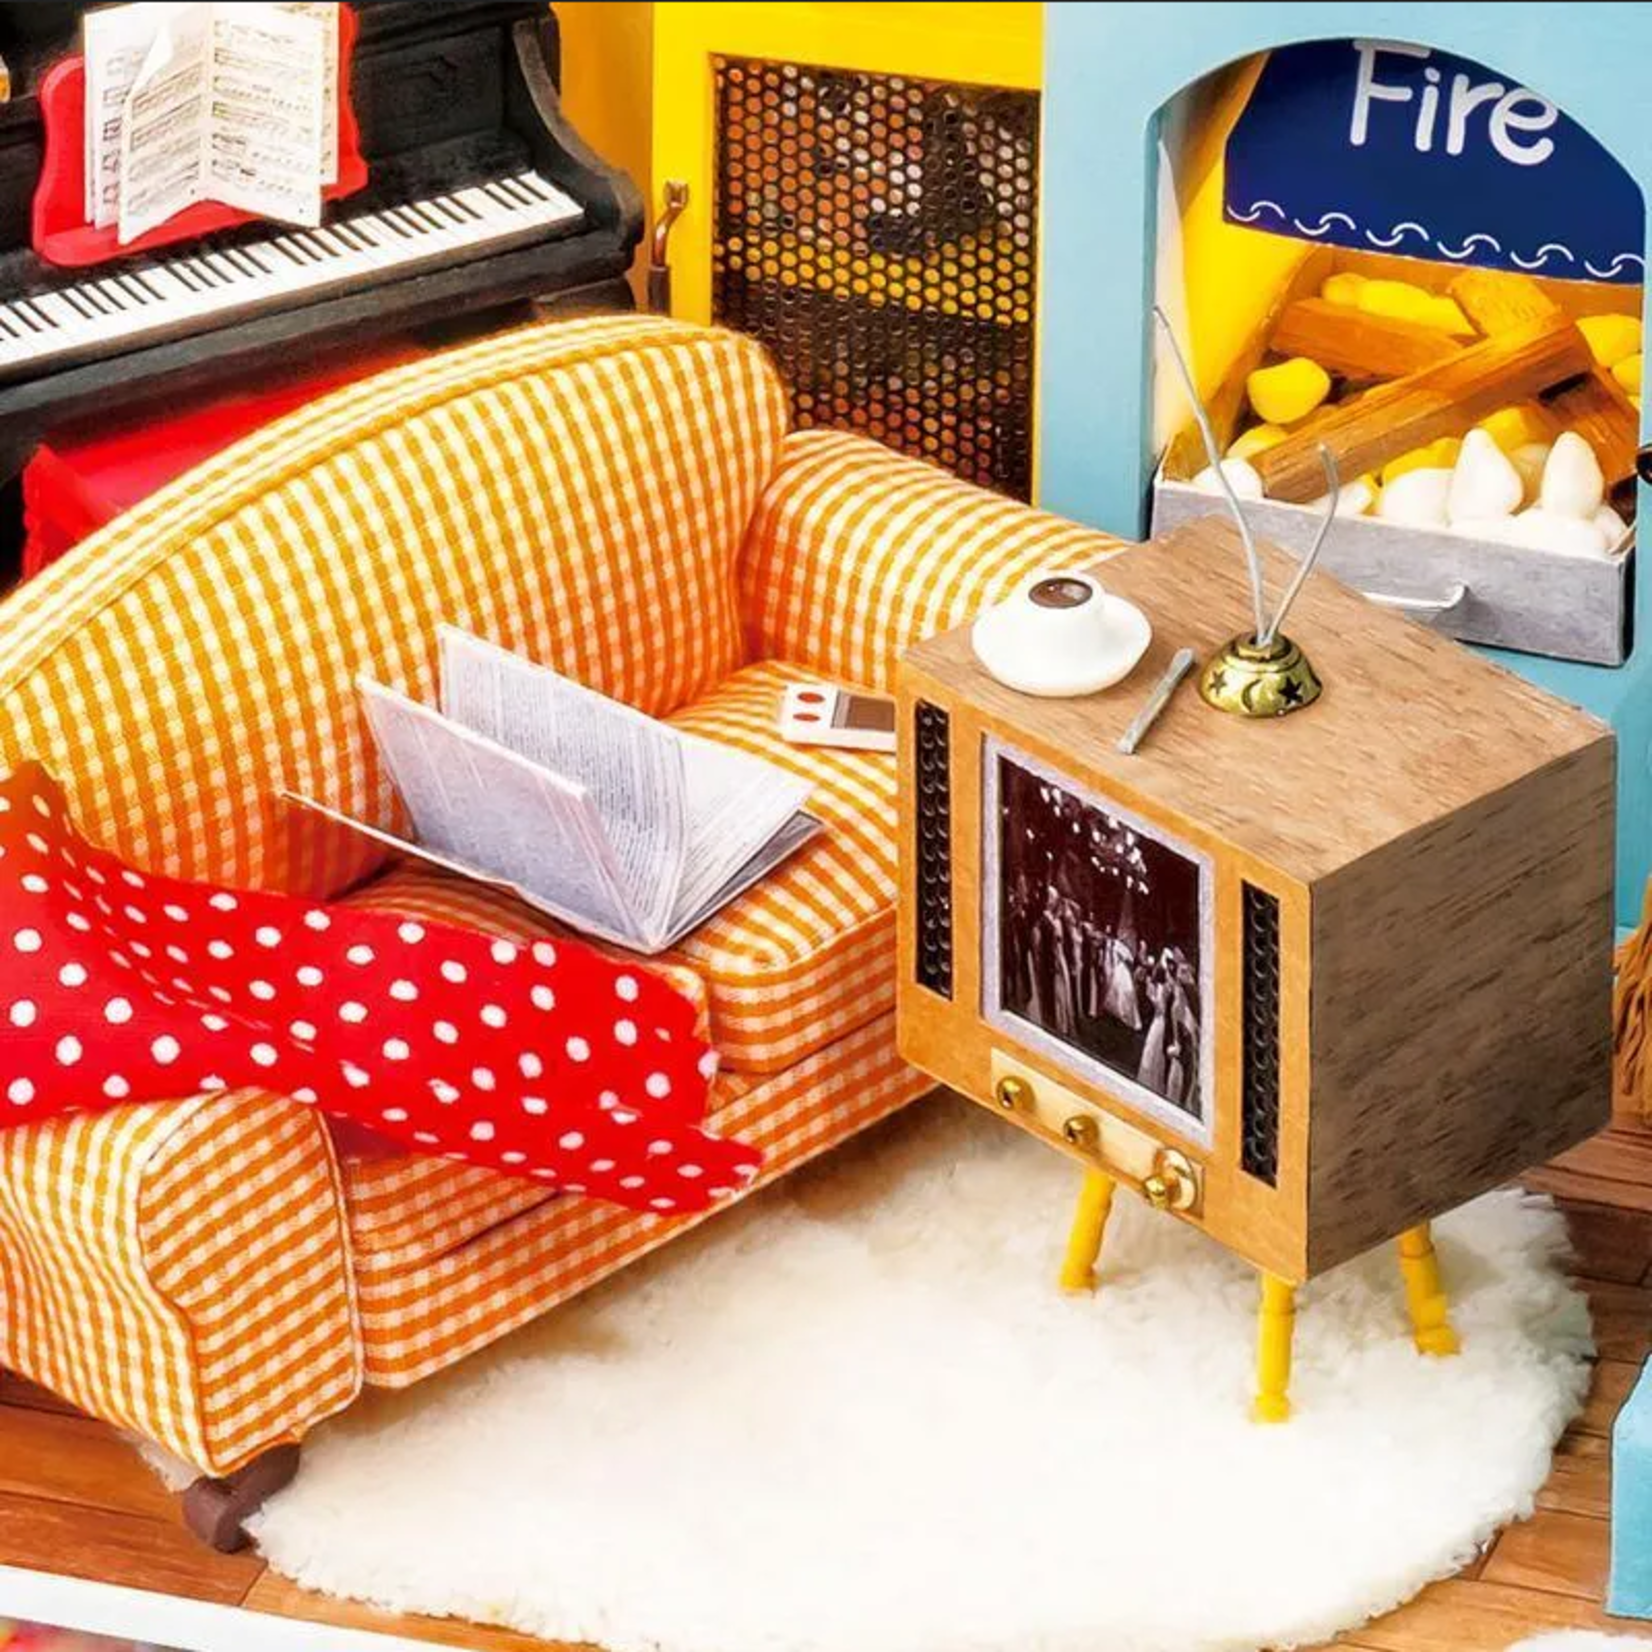 Robotime Rolife DG141 - DIY Miniature House - Joy's Peninsula Living Room